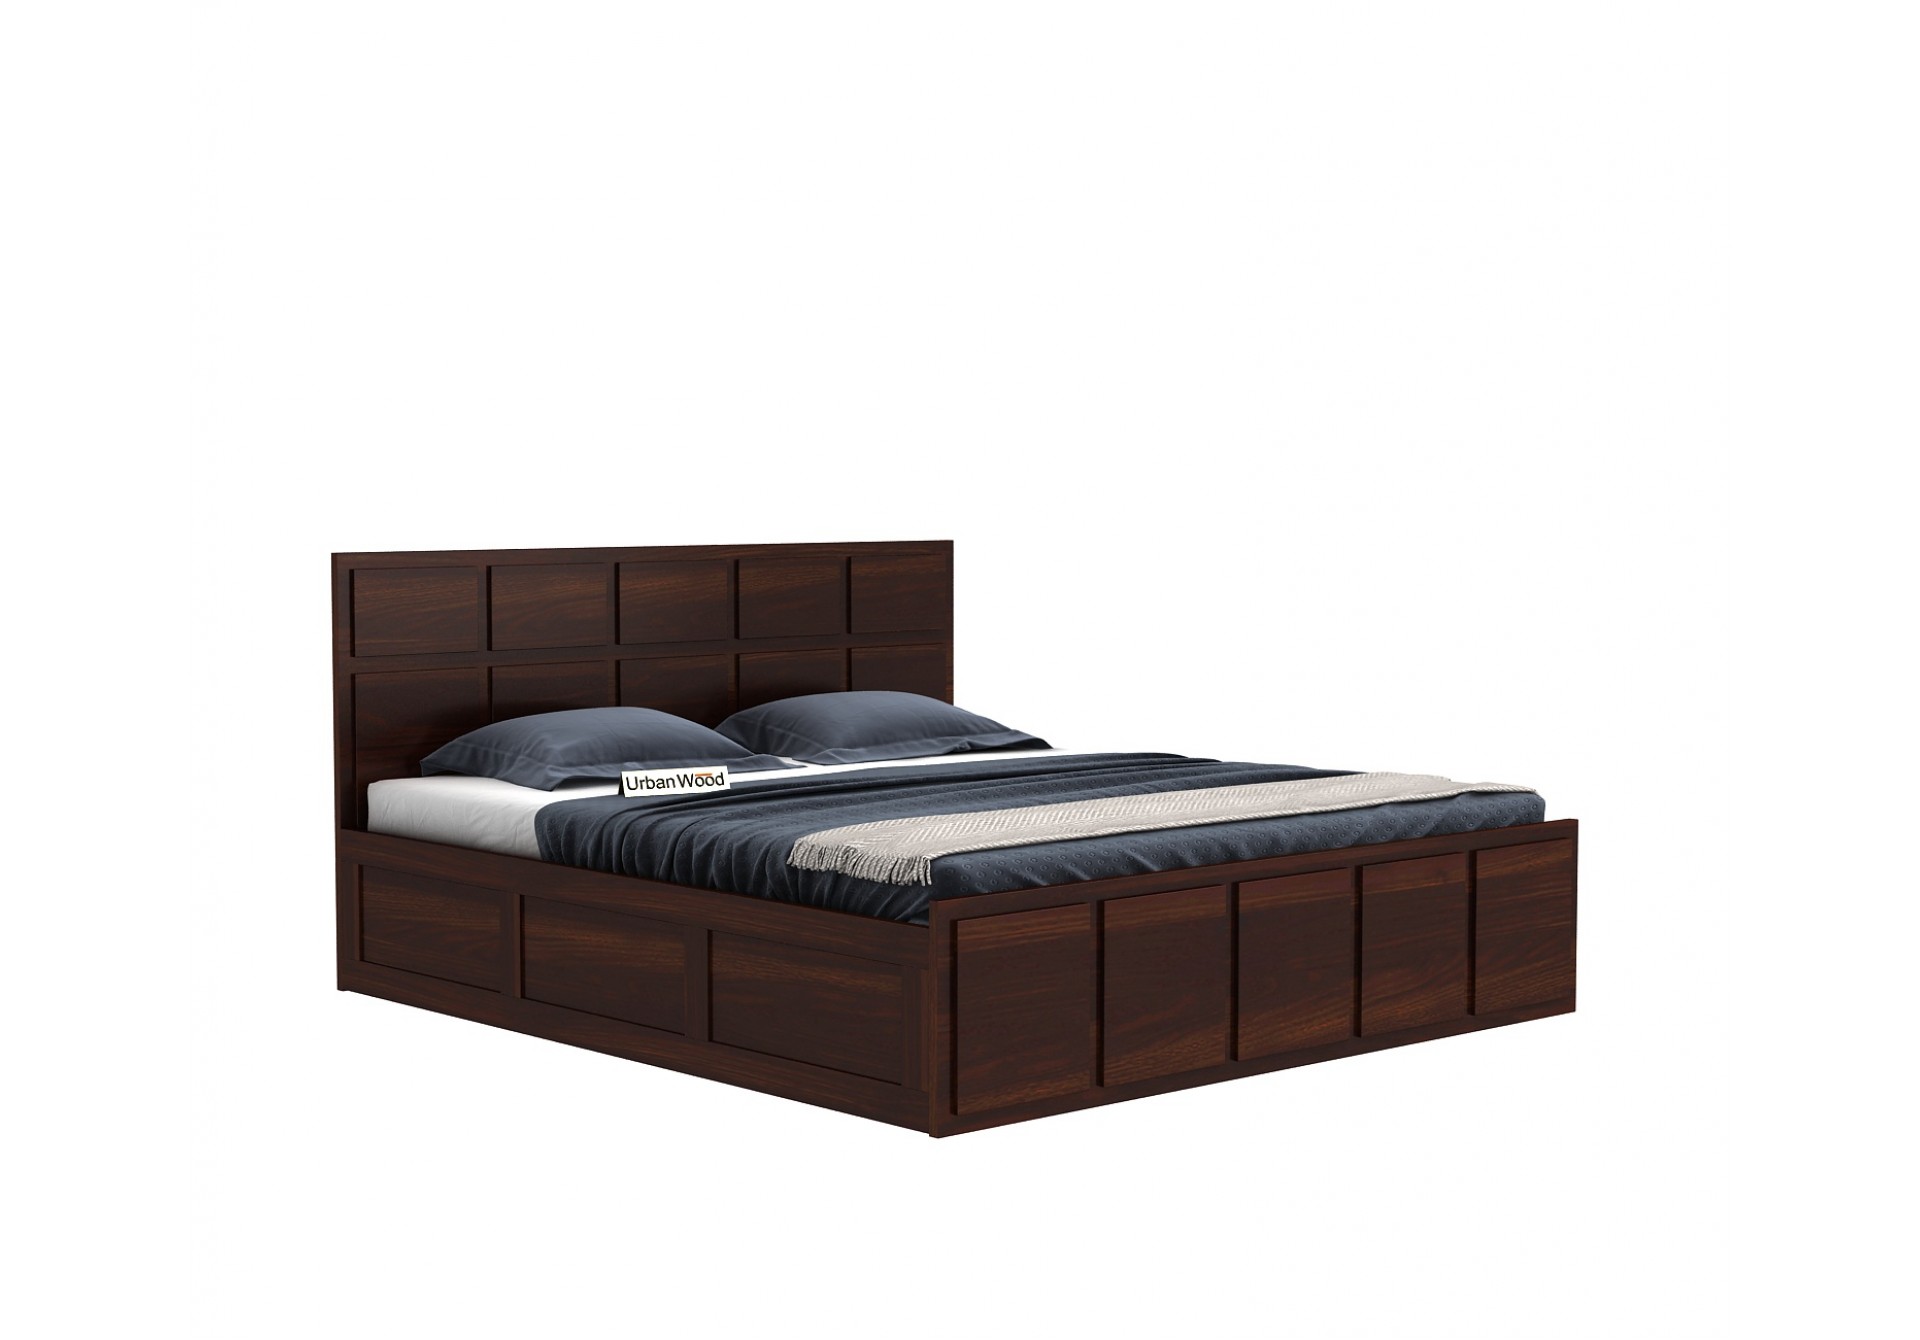 Bedswind Bed With Storage ( King Size, Walnut Finish )